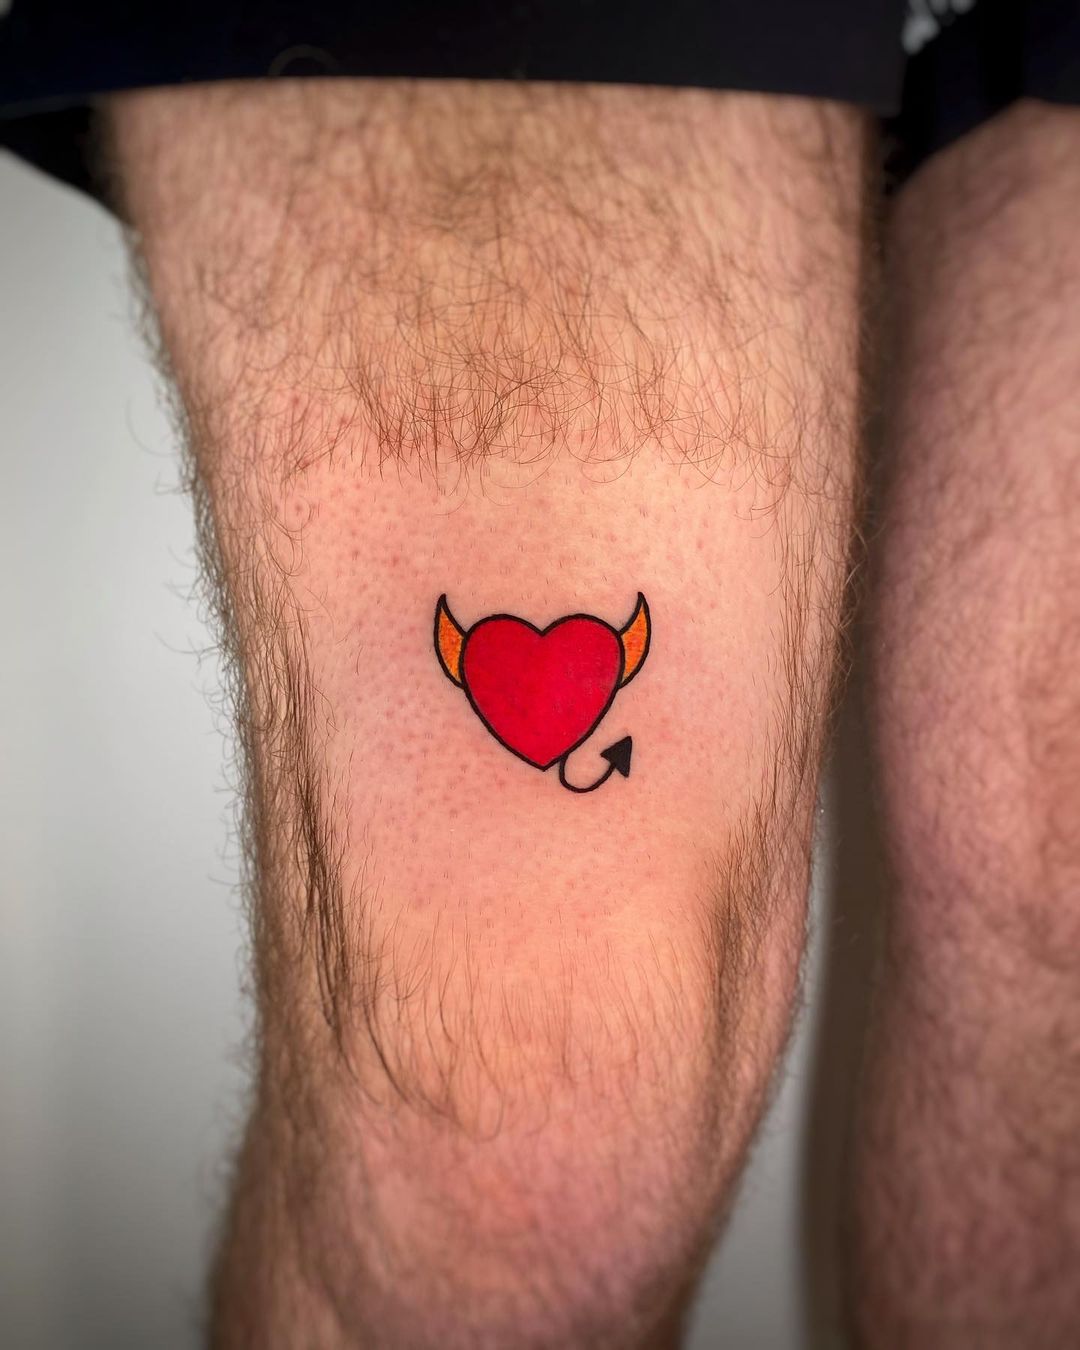 Share 98+ about heart shape tattoo super cool .vn